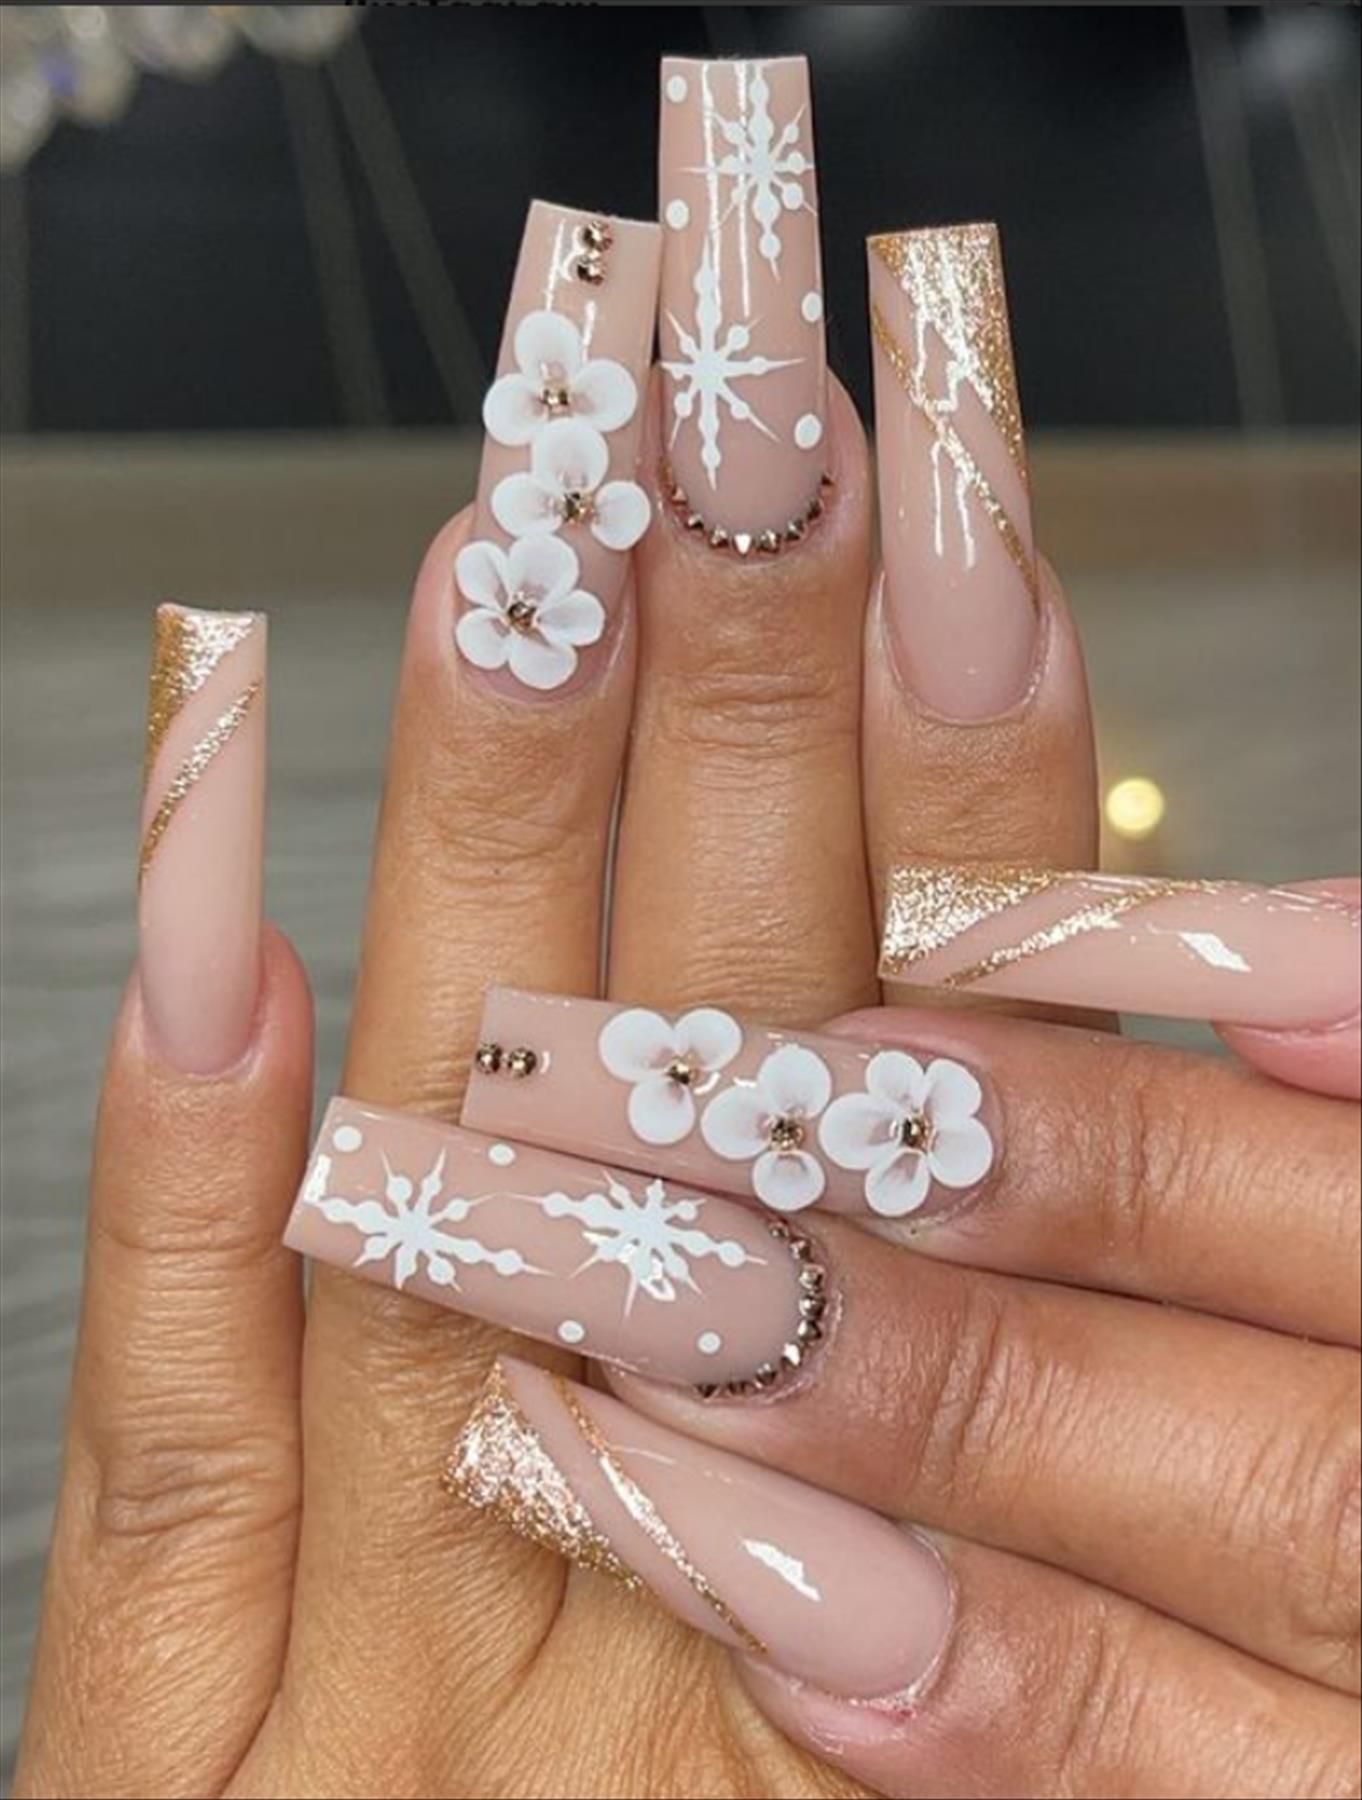 Elegant Christmas acrylic nails with snowflake nails